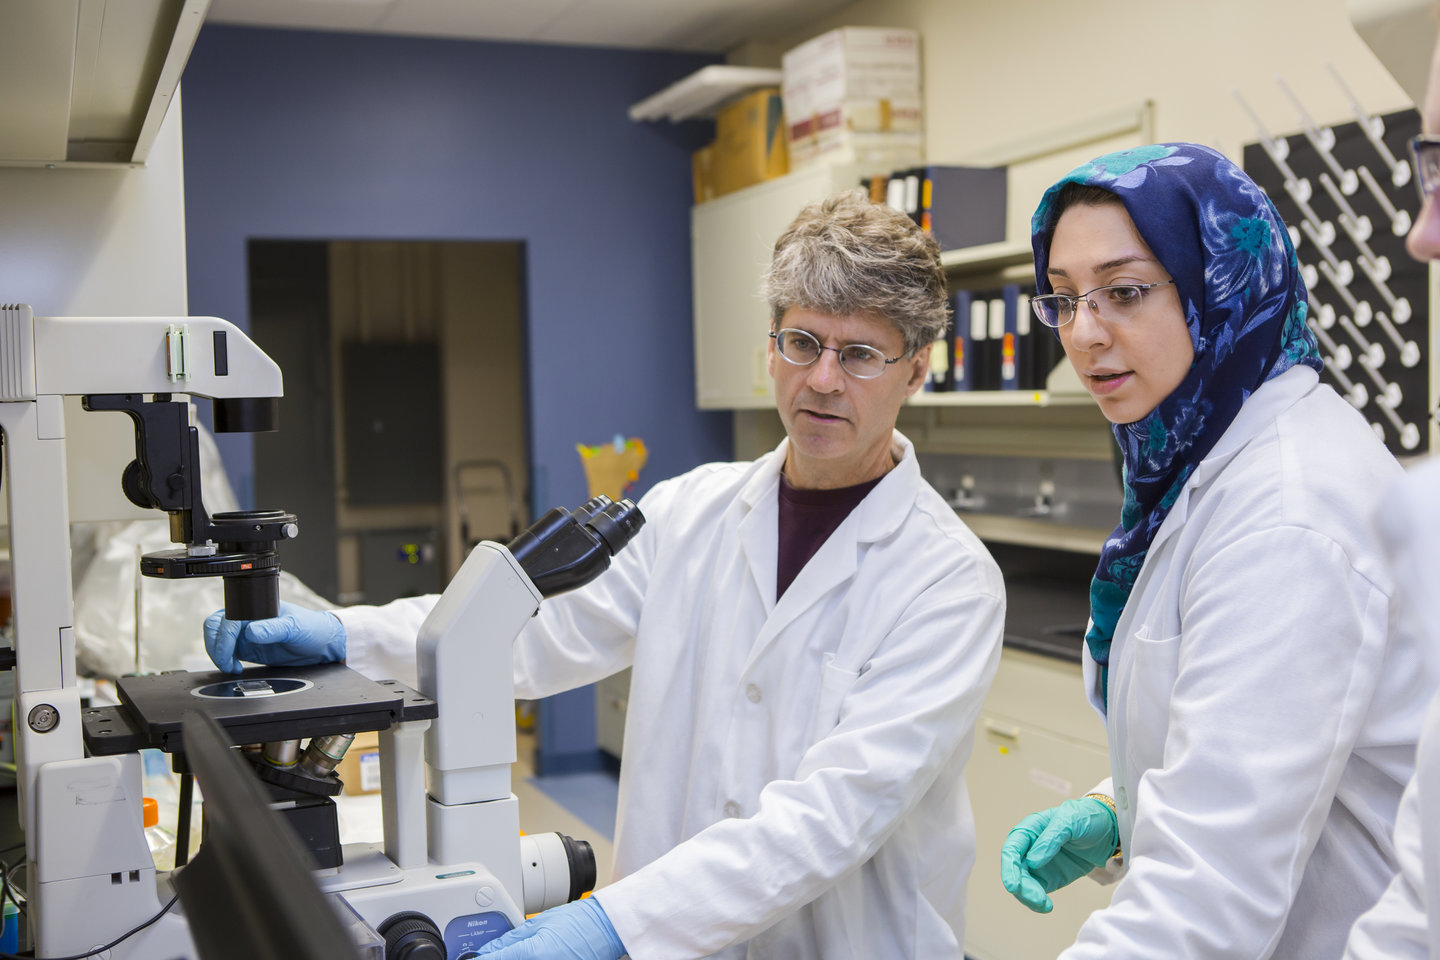 Dr. Doug Goetz and an associate, wearing white coats, use lab equipment